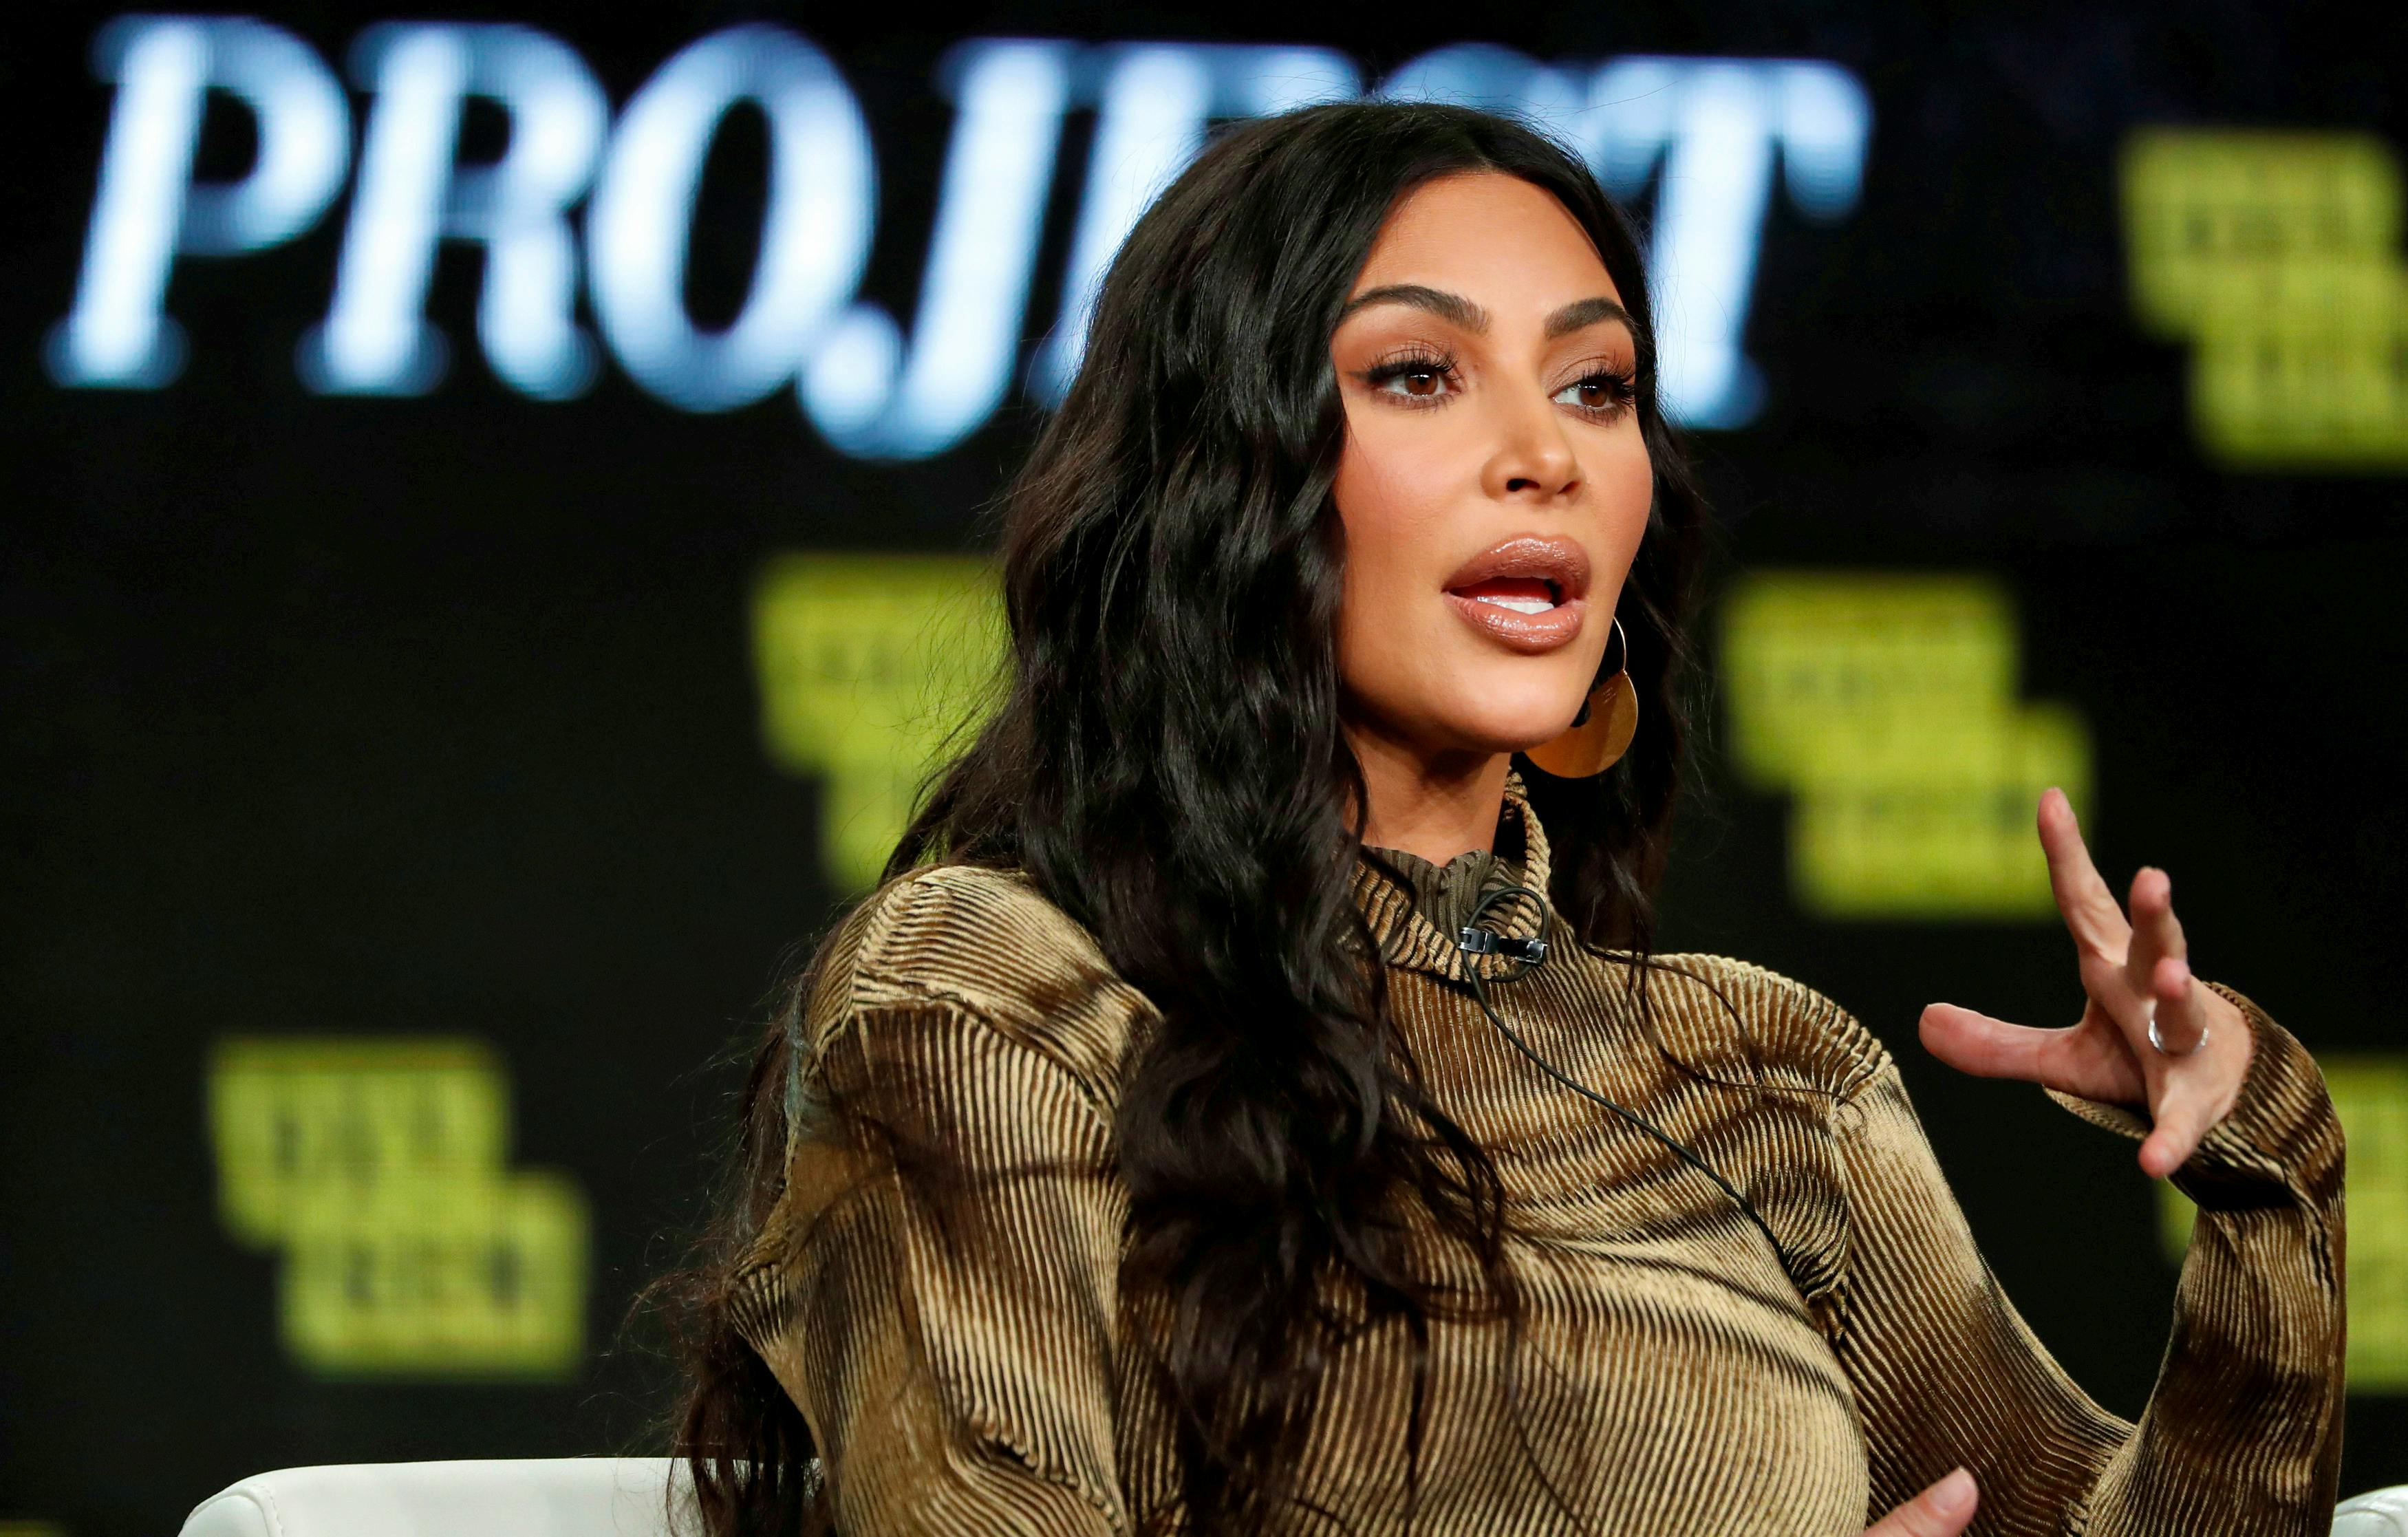 Kim Kardashian in talks to buy back beauty firm stake from Coty